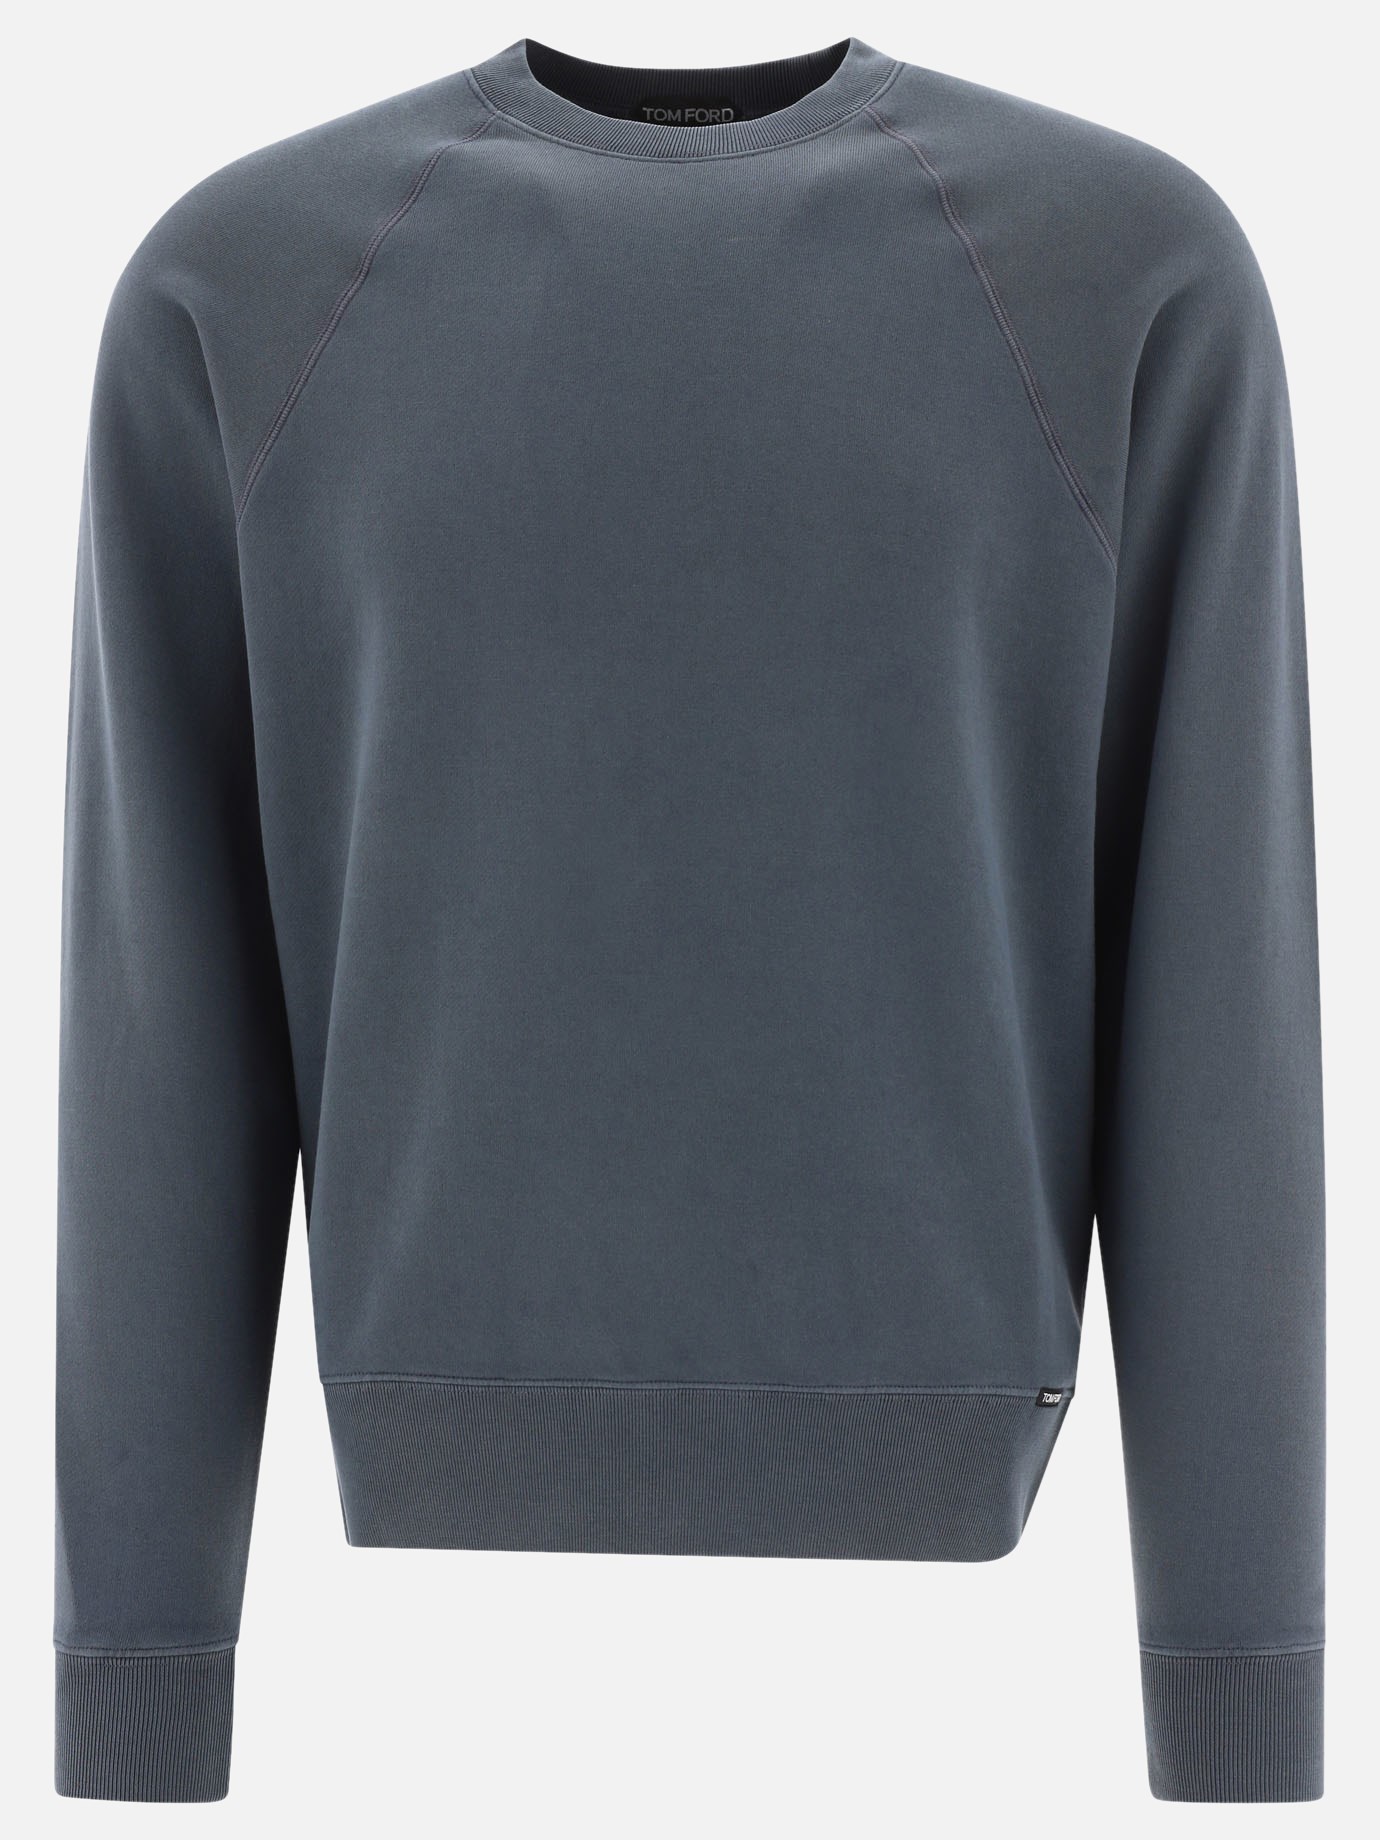 Basic sweatshirtby Tom Ford - 0